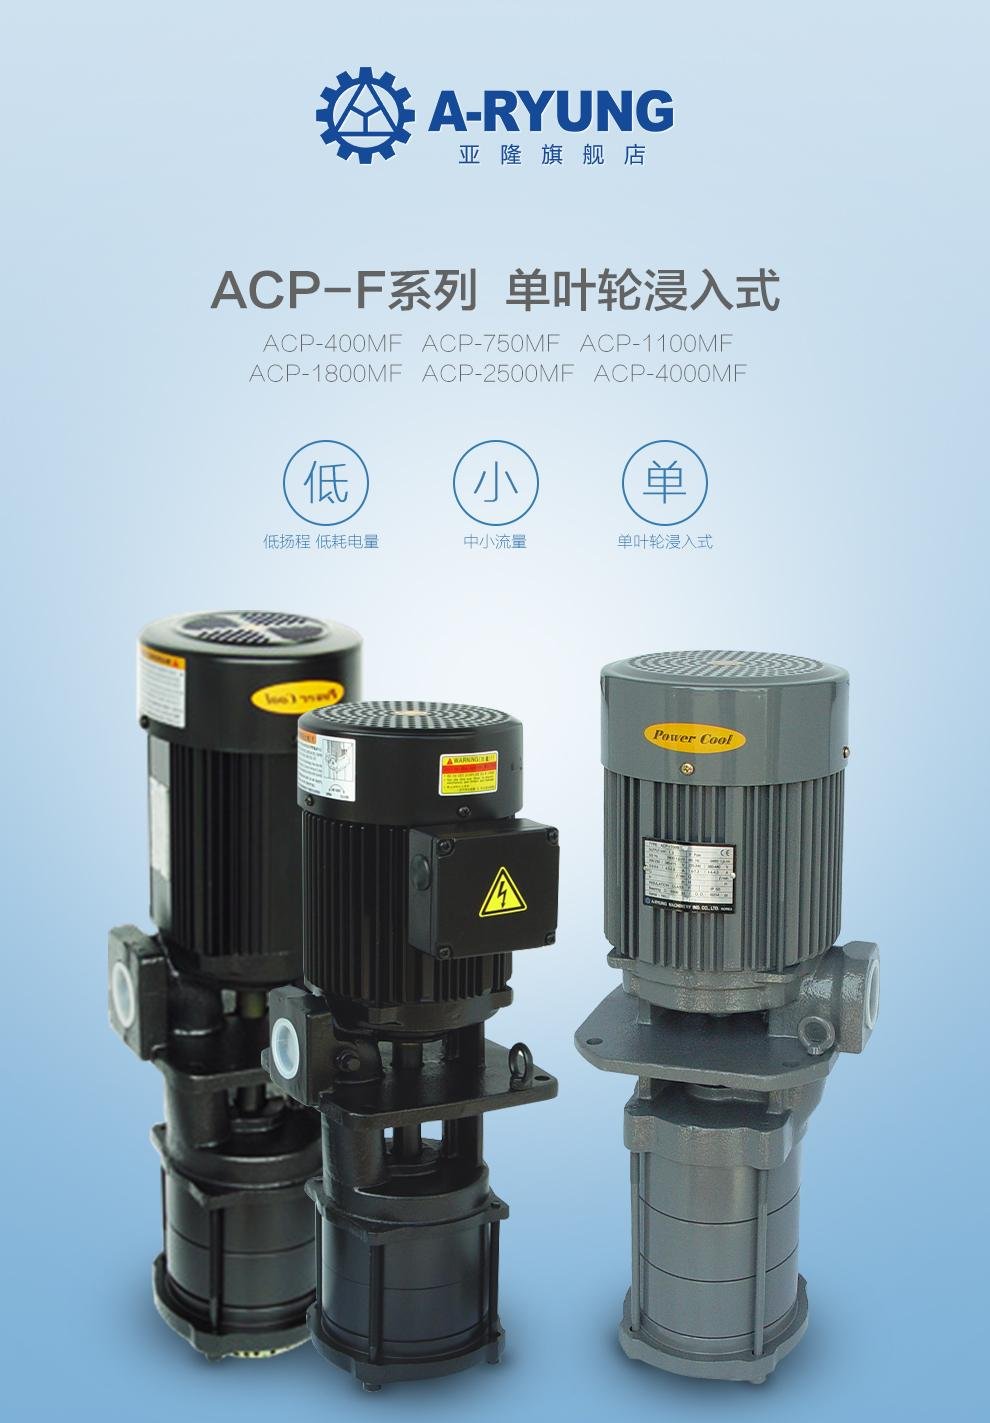 ACP-1100MF Yalong Cooling Pump